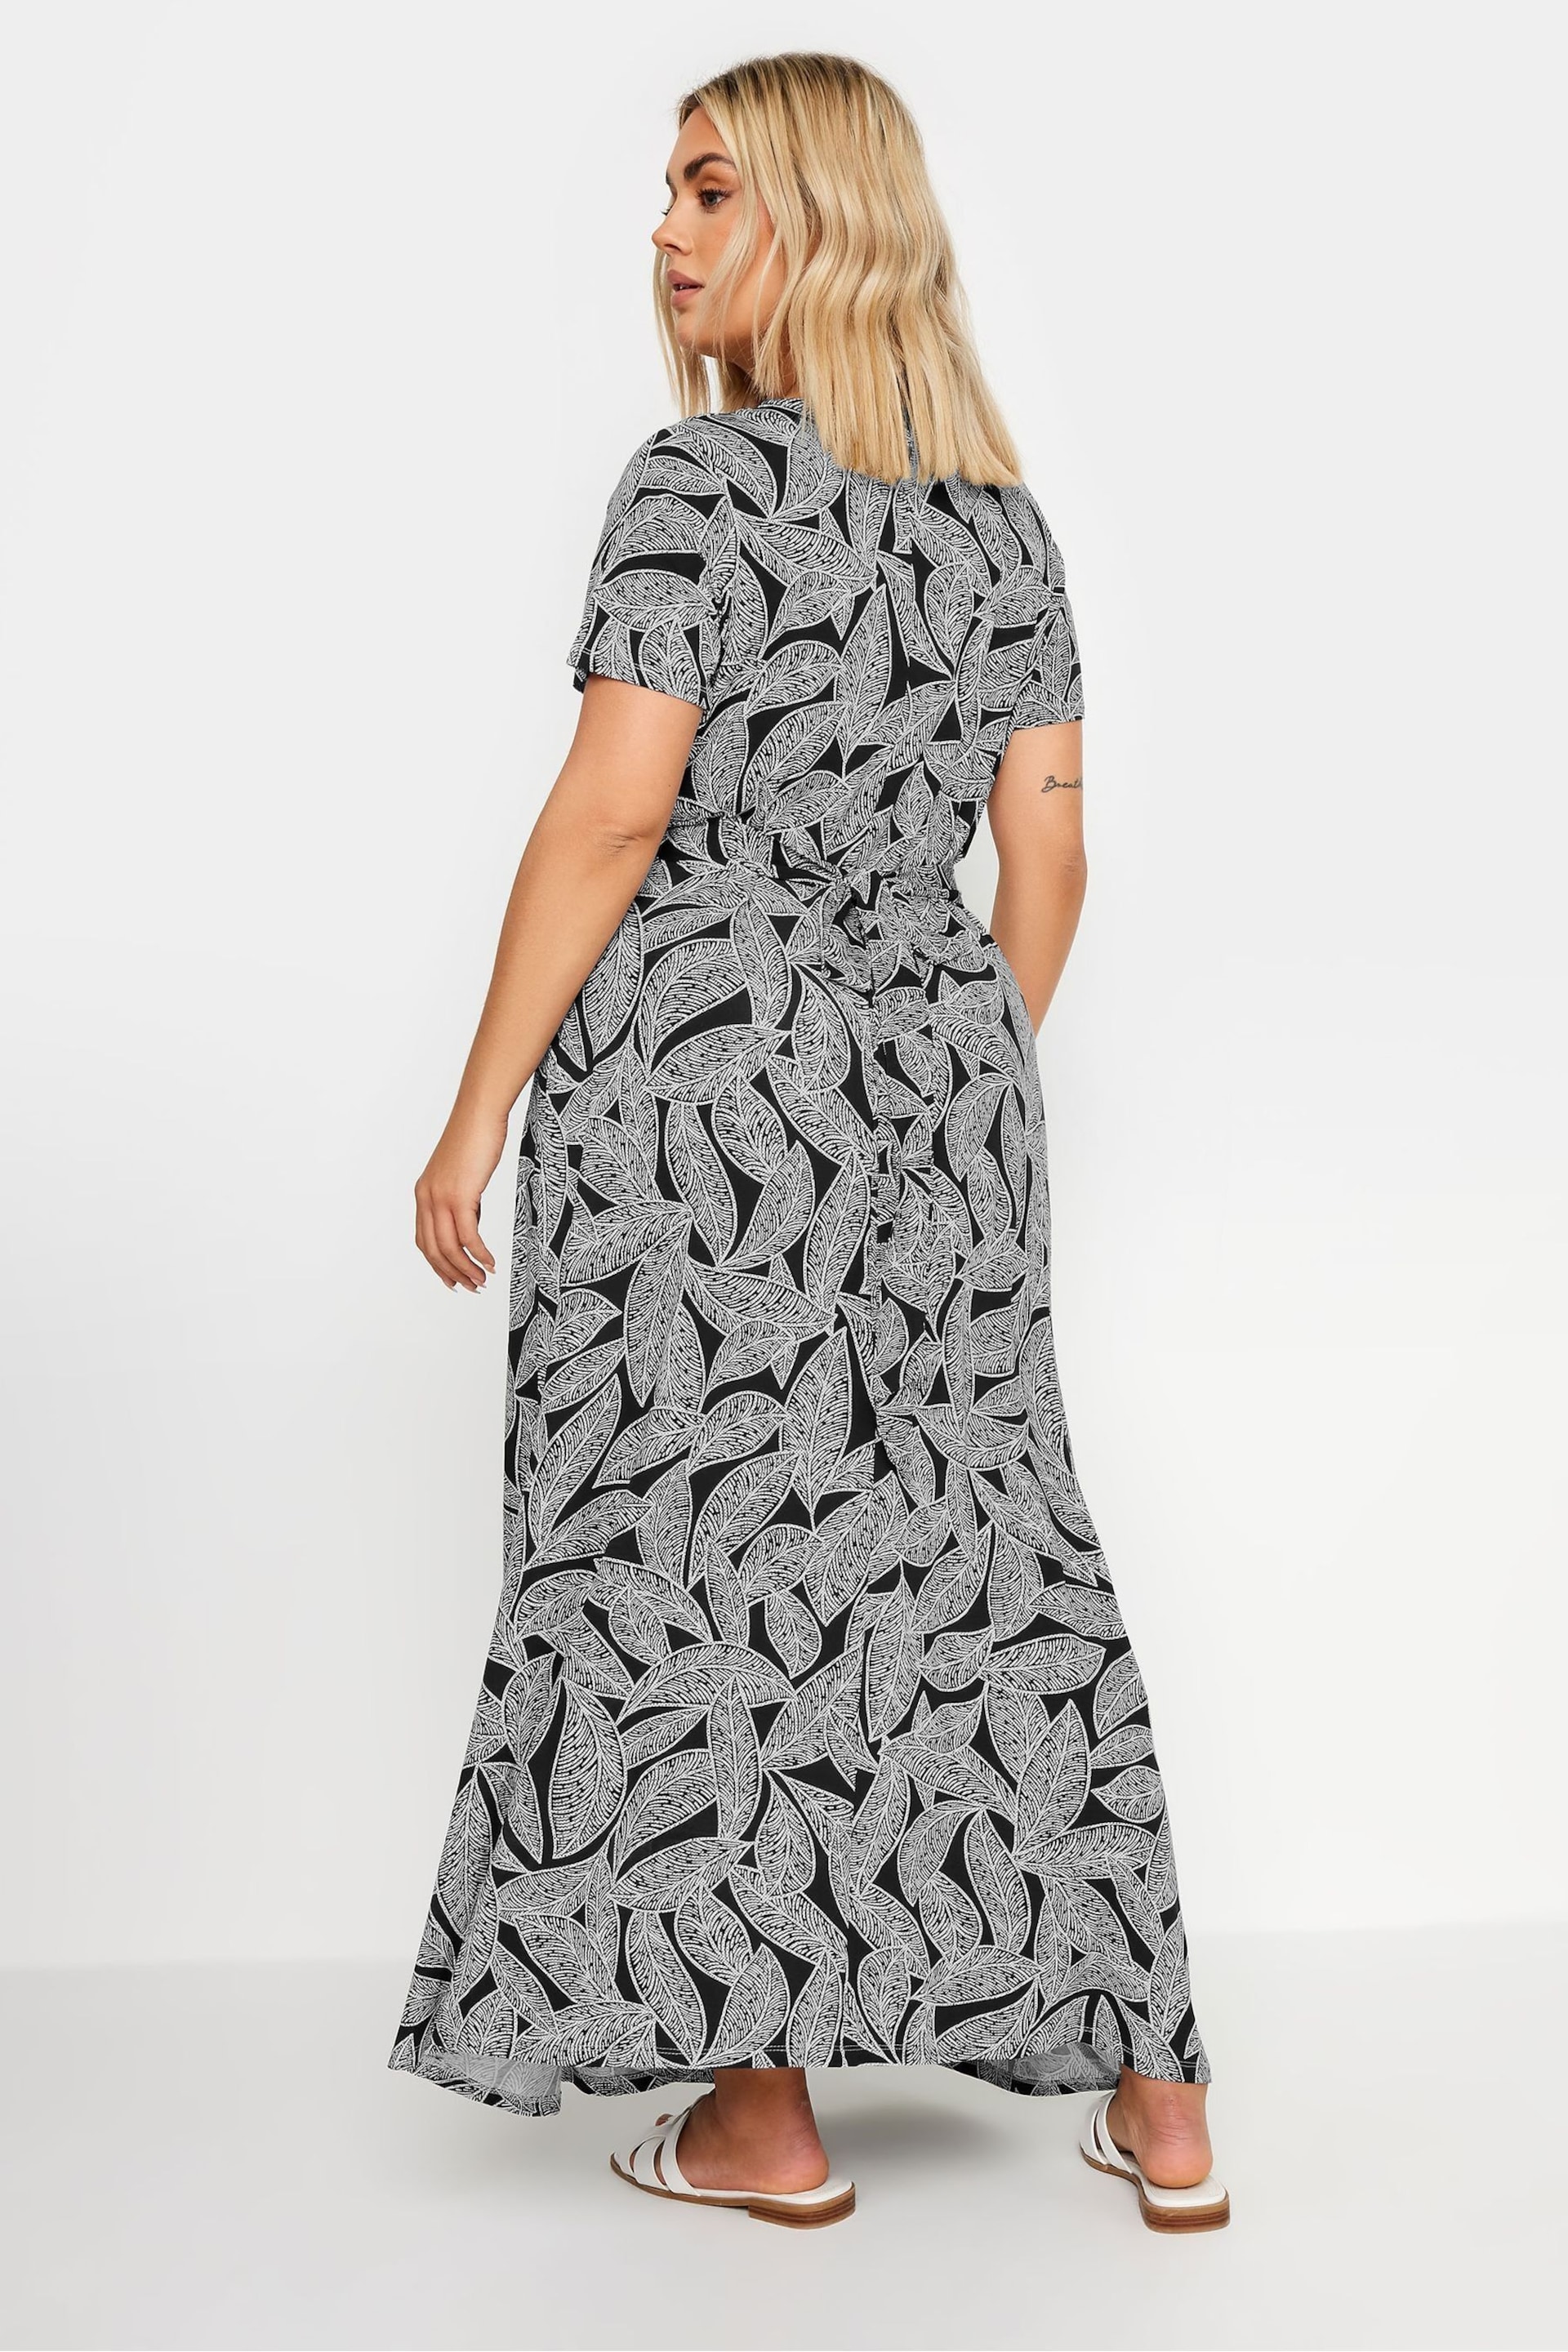 Yours Curve Black Leaf Print Tie Maxi Dress - Image 3 of 5